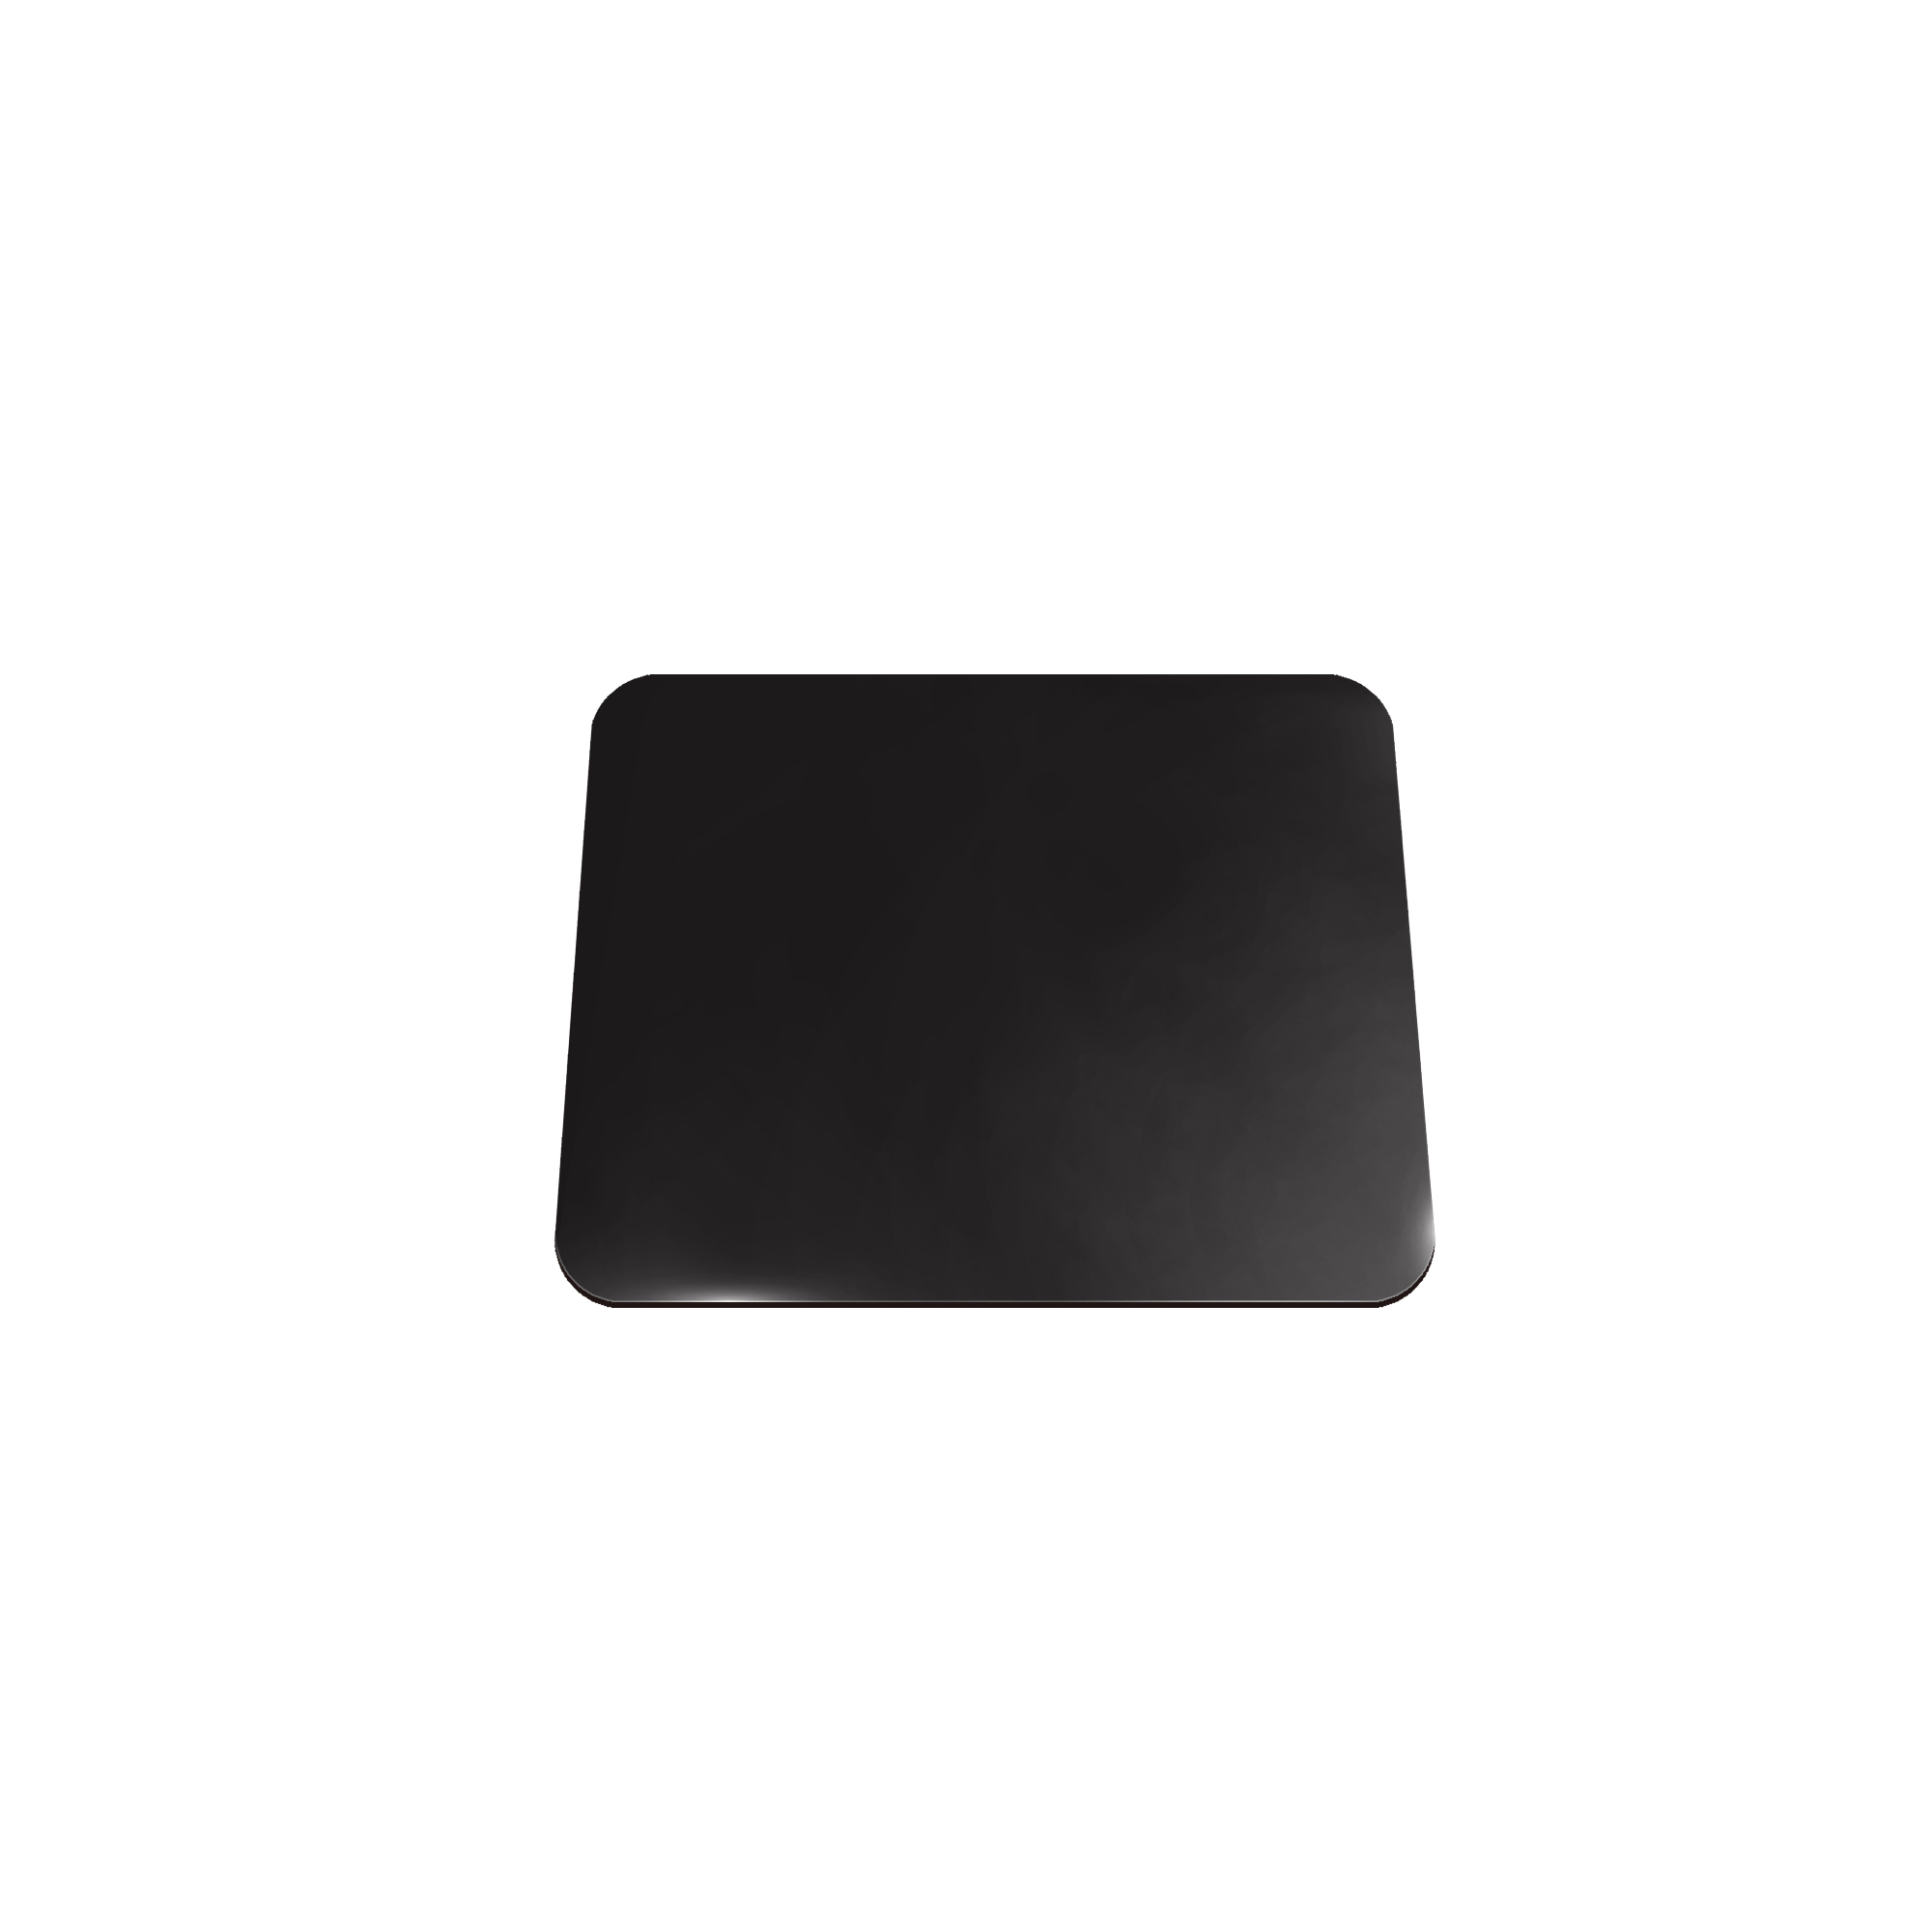 Aleco ES Robbins, Black Rectangle Desk Pad, 24Inchx19Inch, Length 19 in, Width 24 in, Material Vinyl, Model 120748